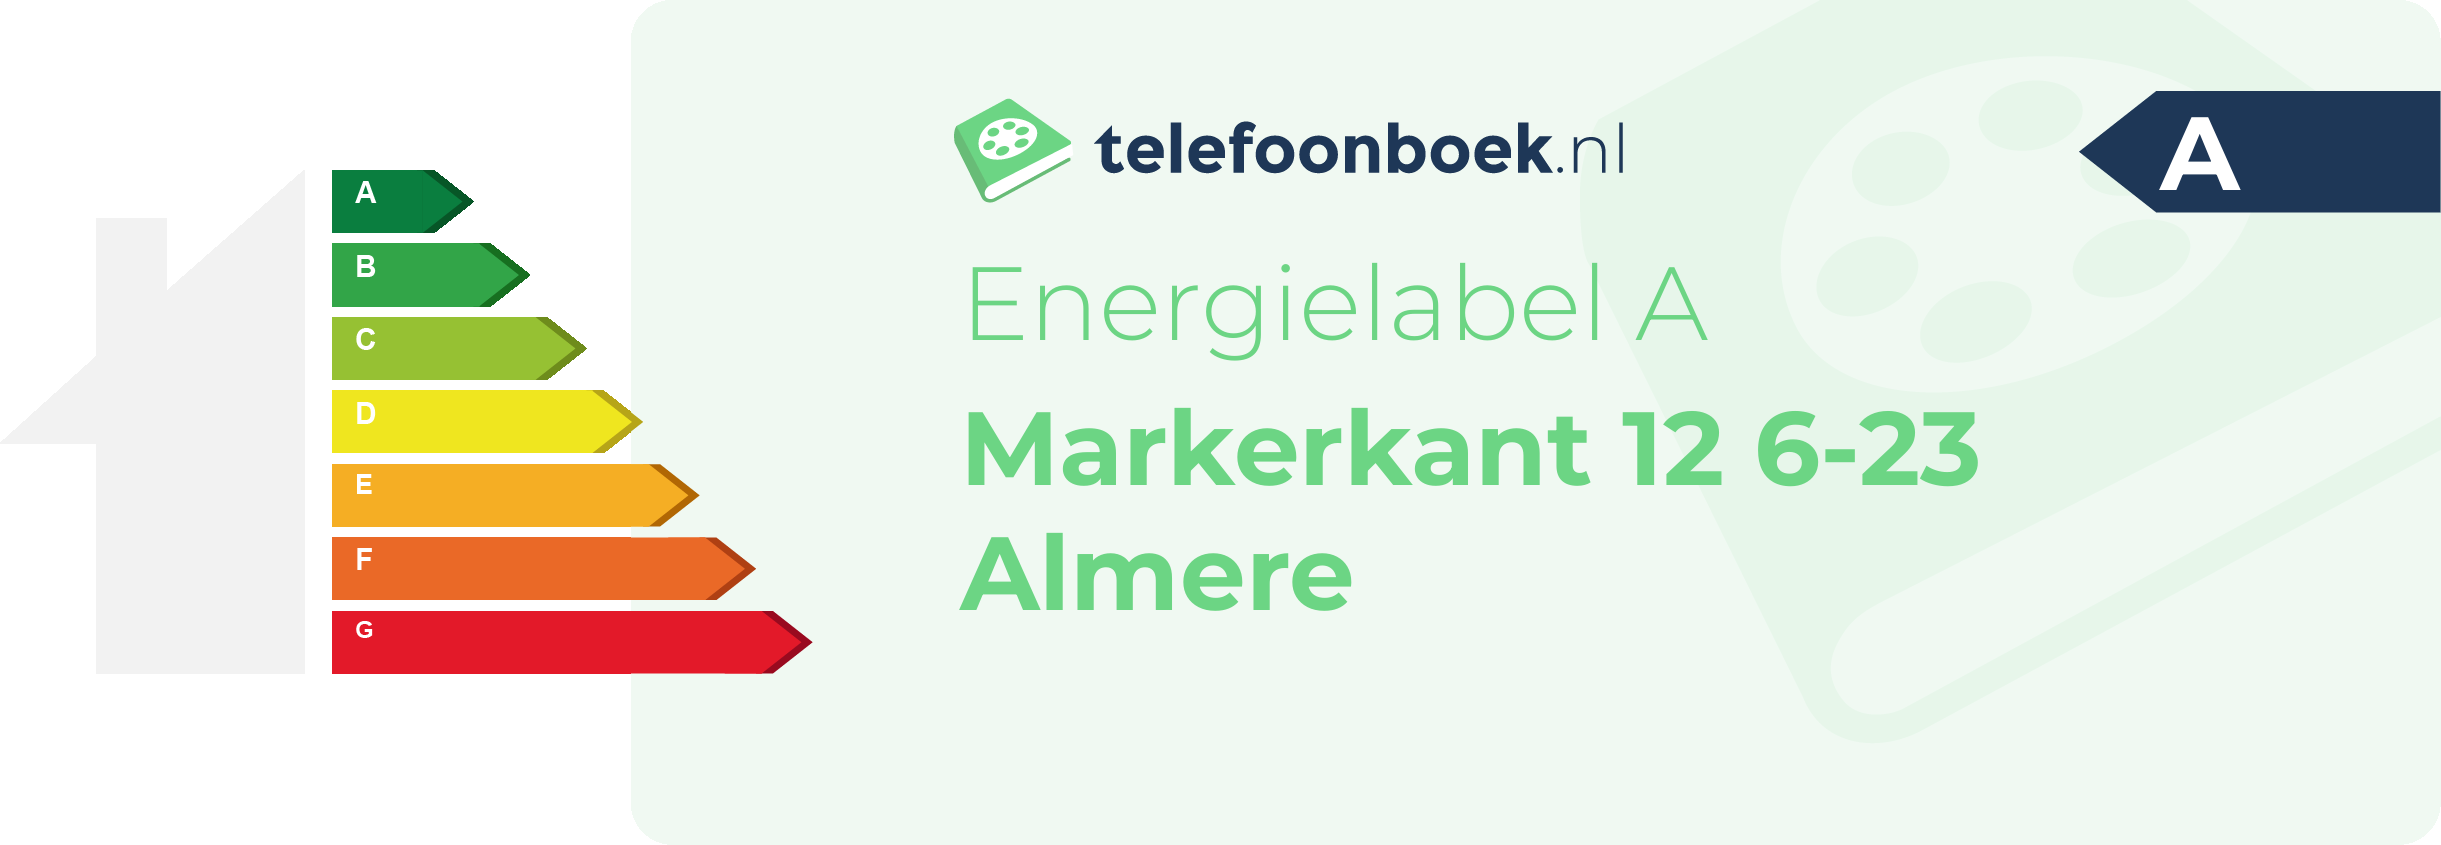 Energielabel Markerkant 12 6-23 Almere